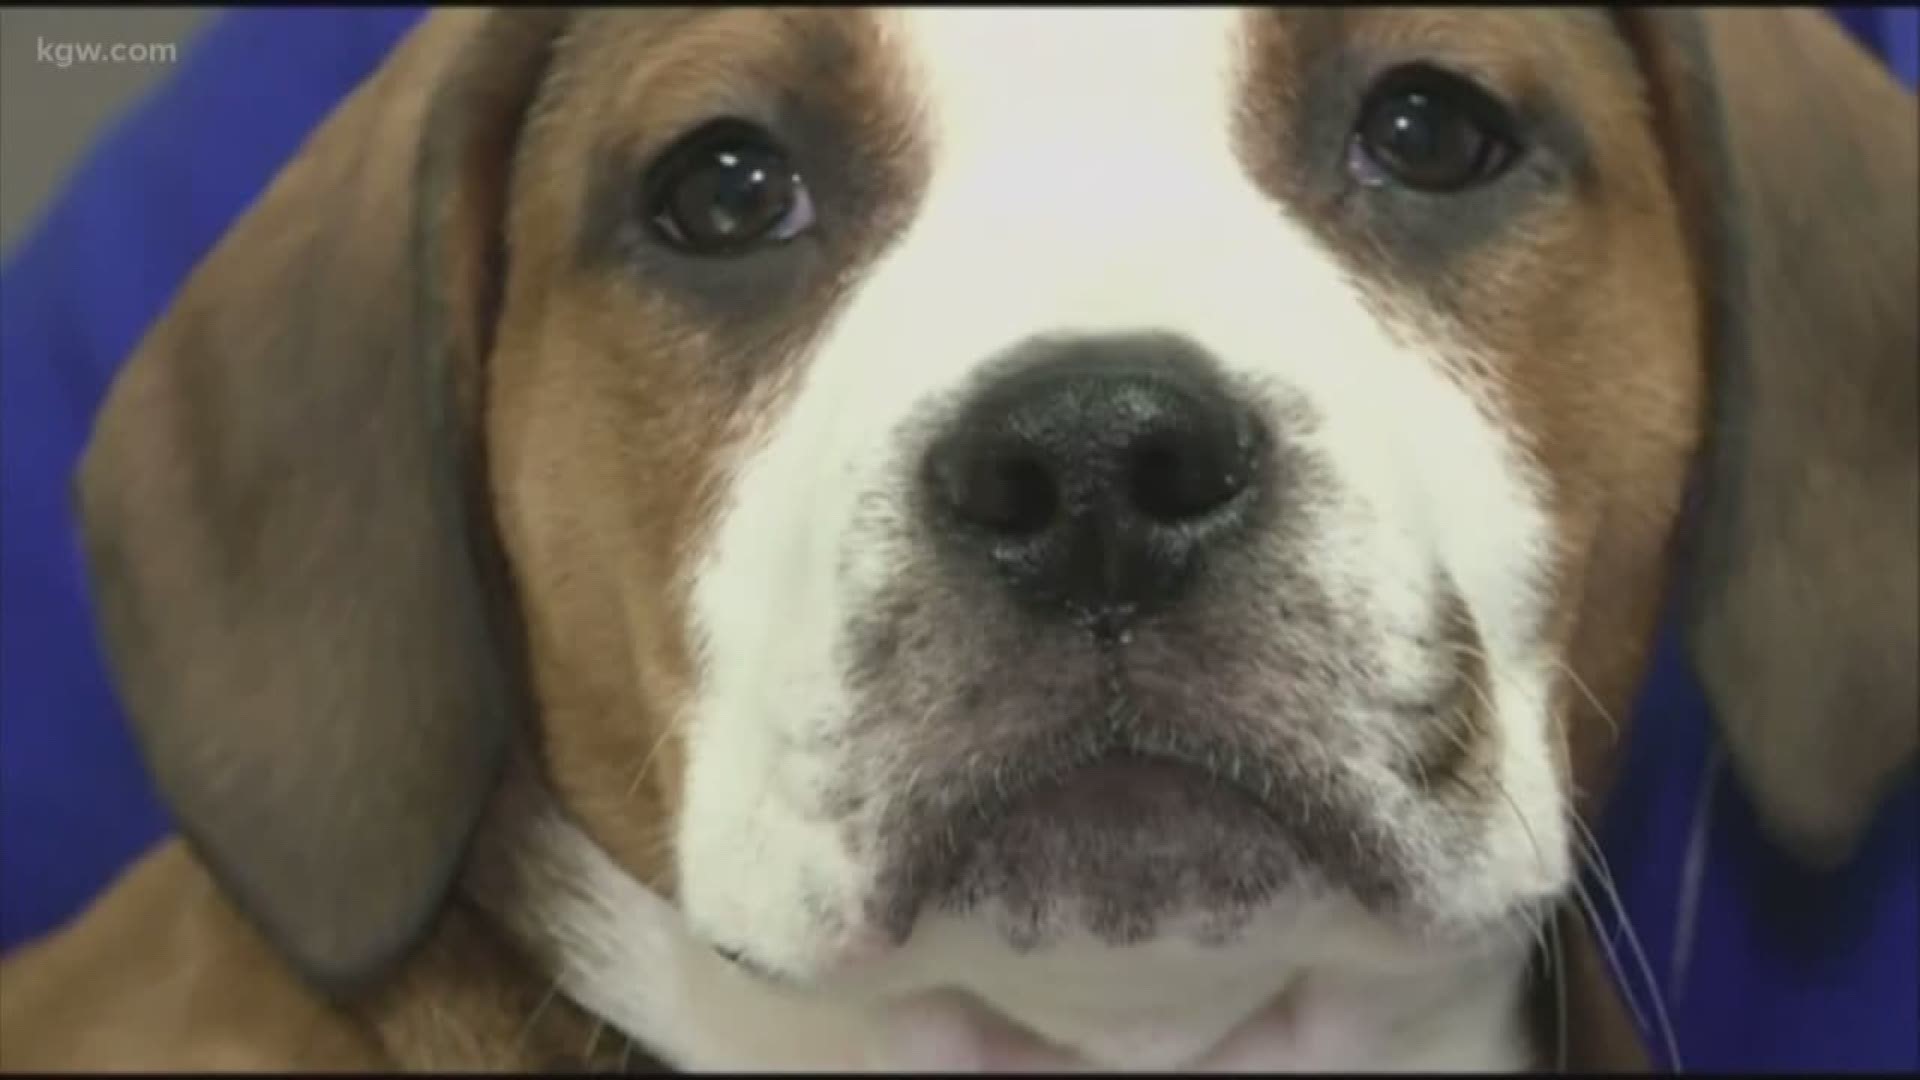 New legislation would crack down on puppy mills.